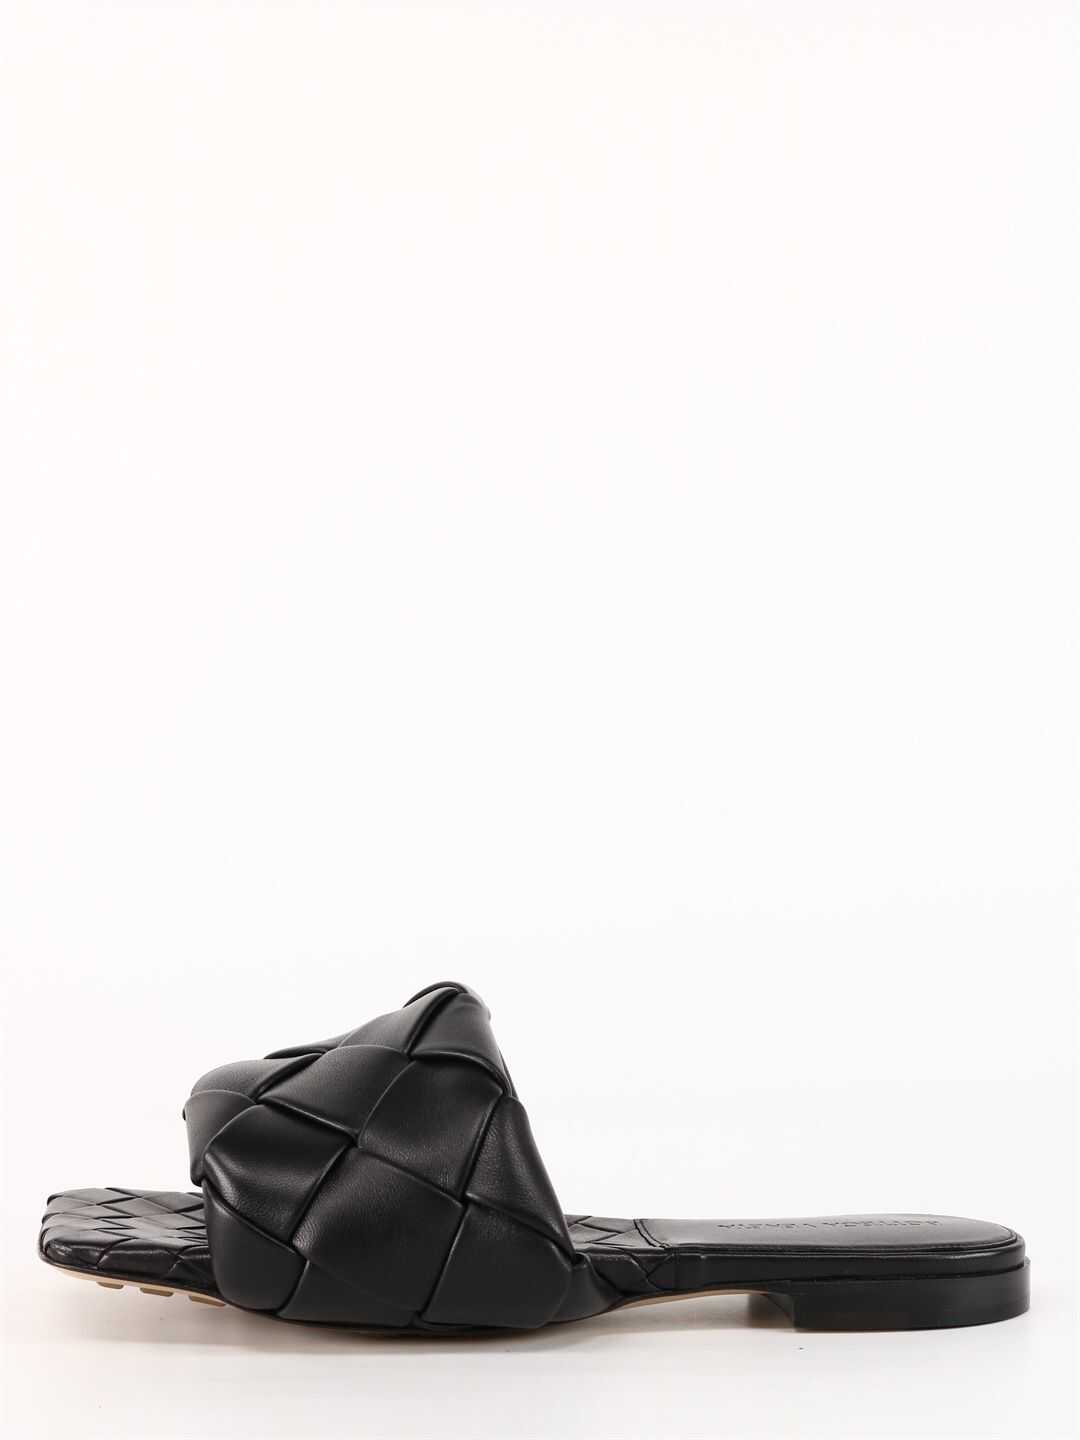 Bottega Veneta The Lido Sandals 608853 VBSS0 Black